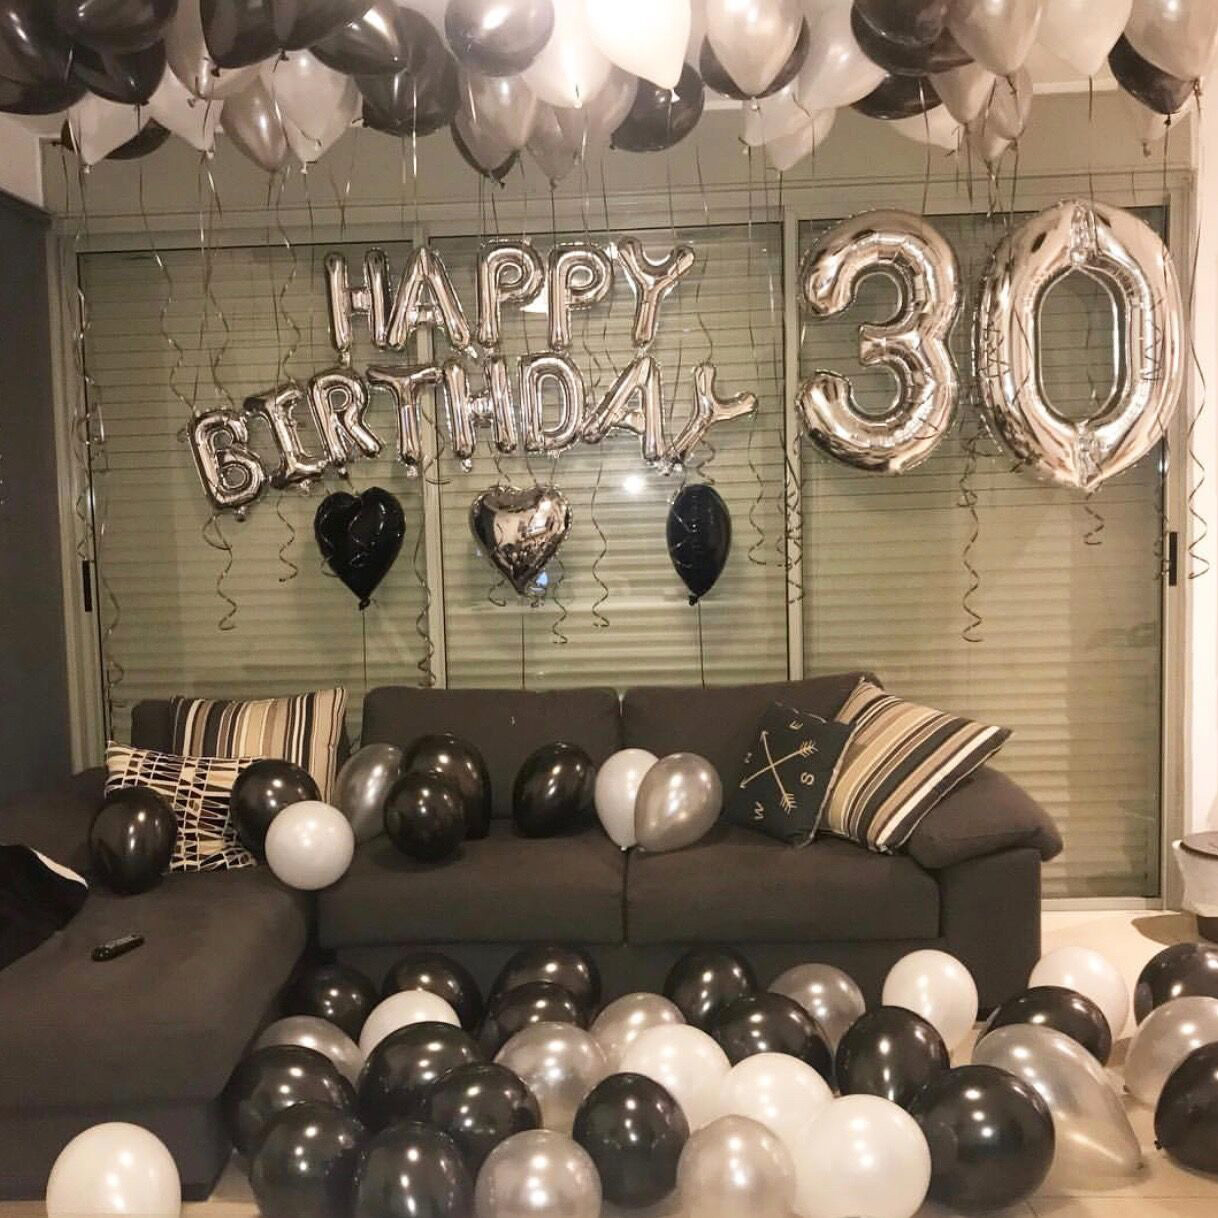 Funlah helium Balloon Package happy birthday 30 year silver black theme